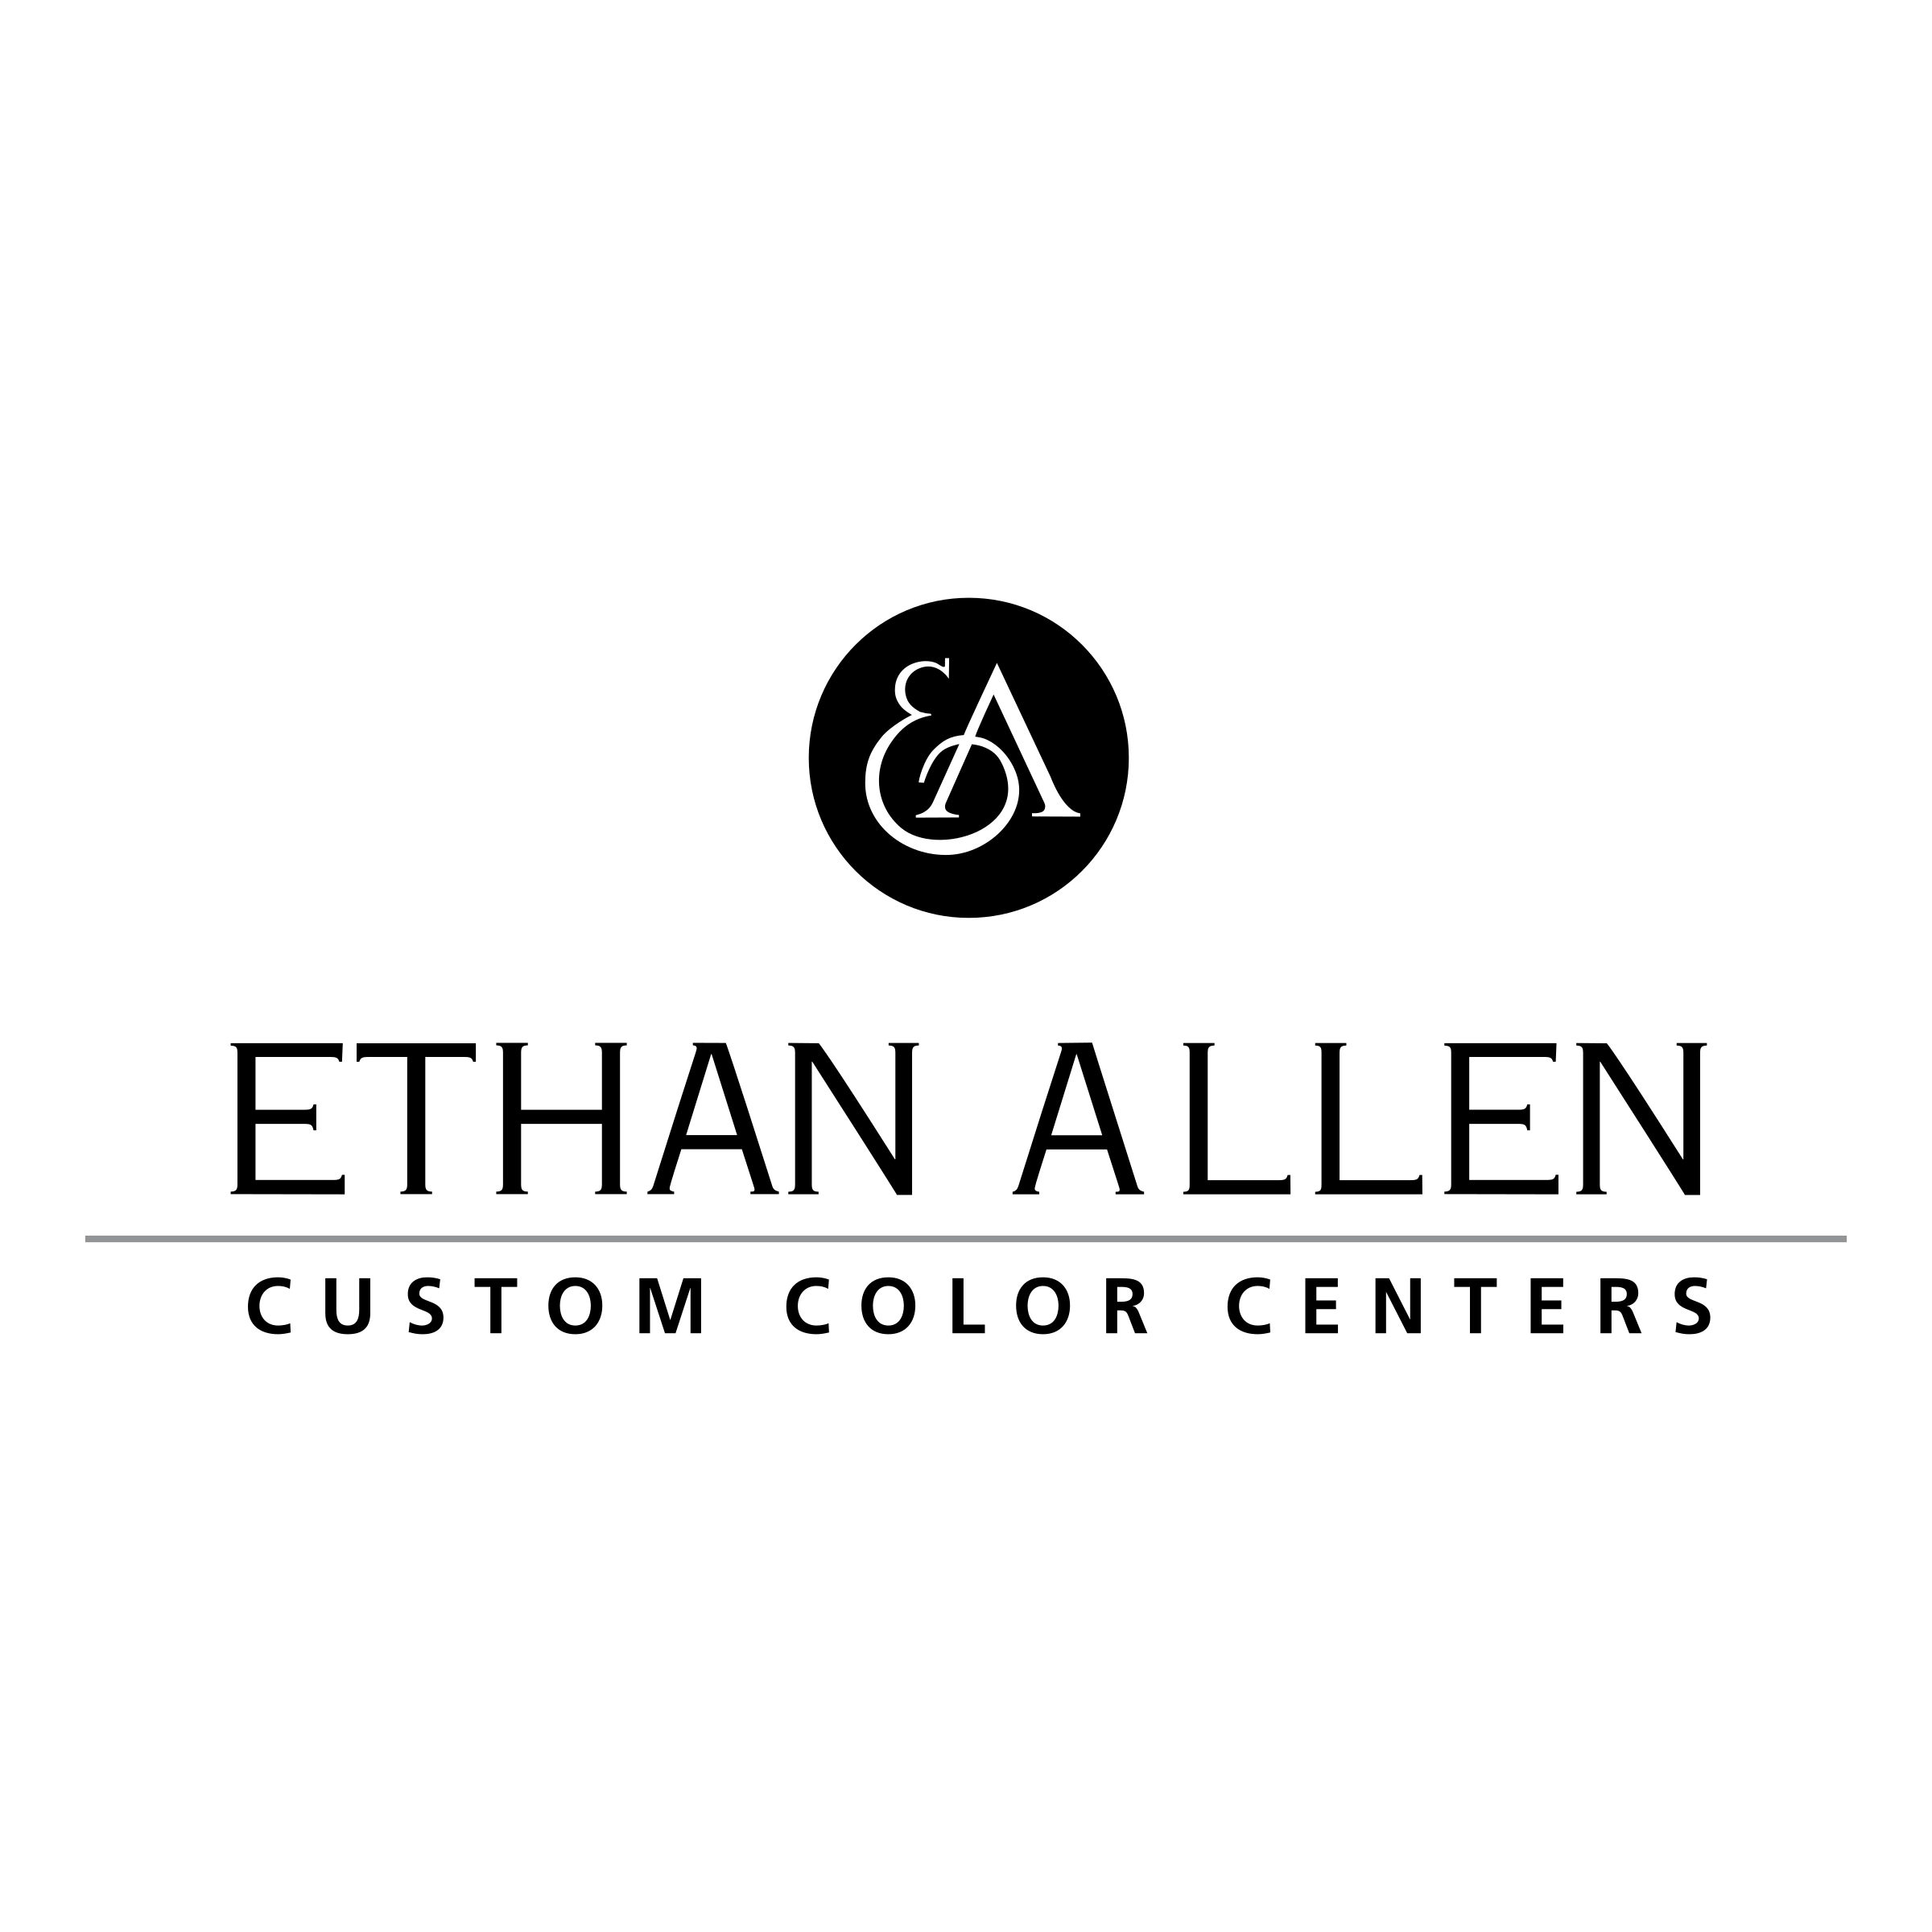 Allen Logo - Ethan Allen Logo PNG Transparent & SVG Vector - Freebie Supply